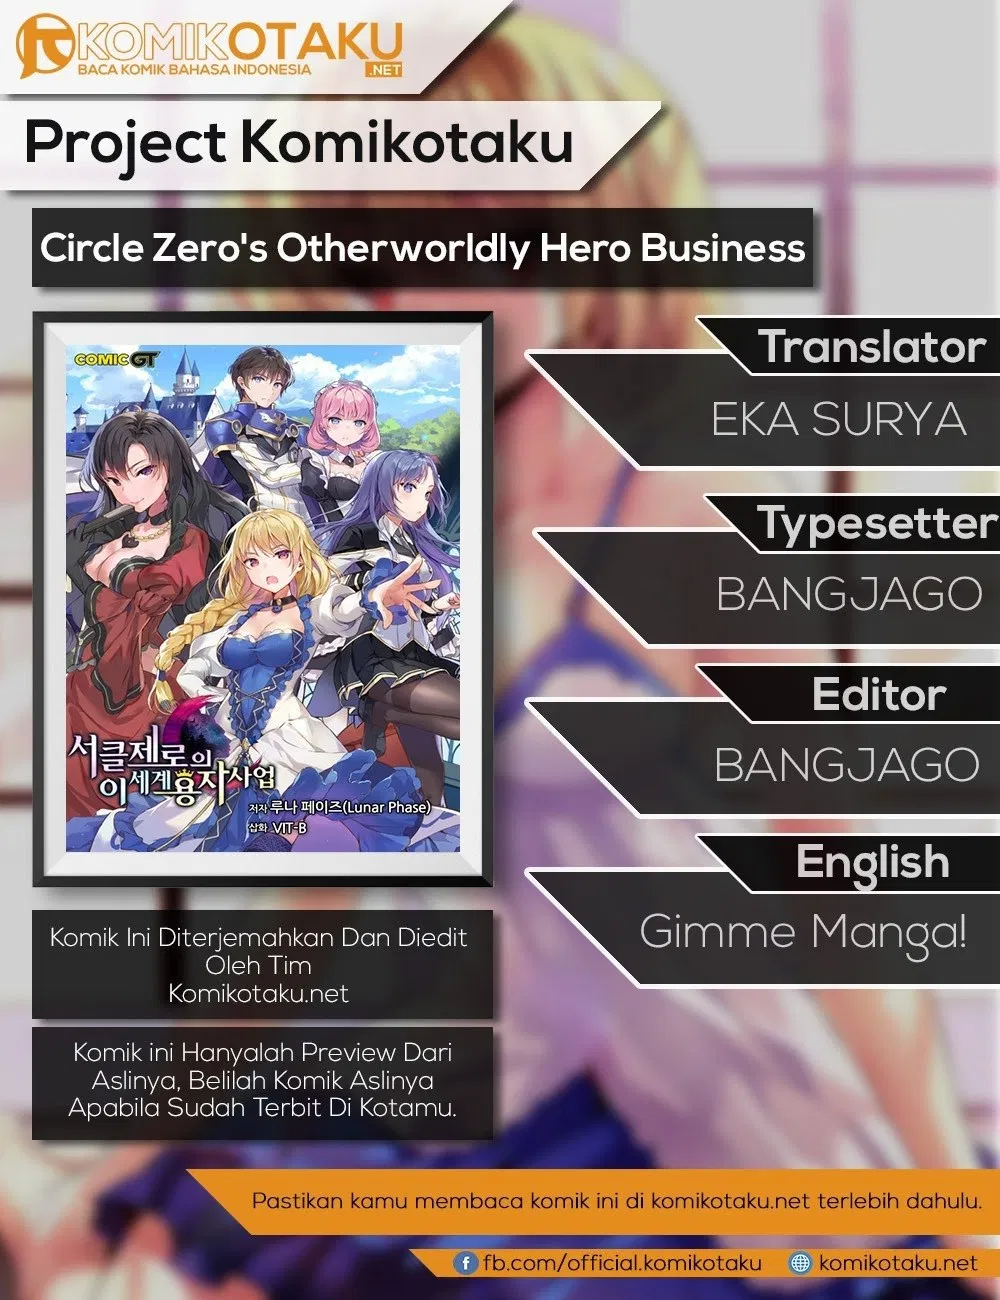 Circle Zero’s Otherworldly Hero Business Chapter 21